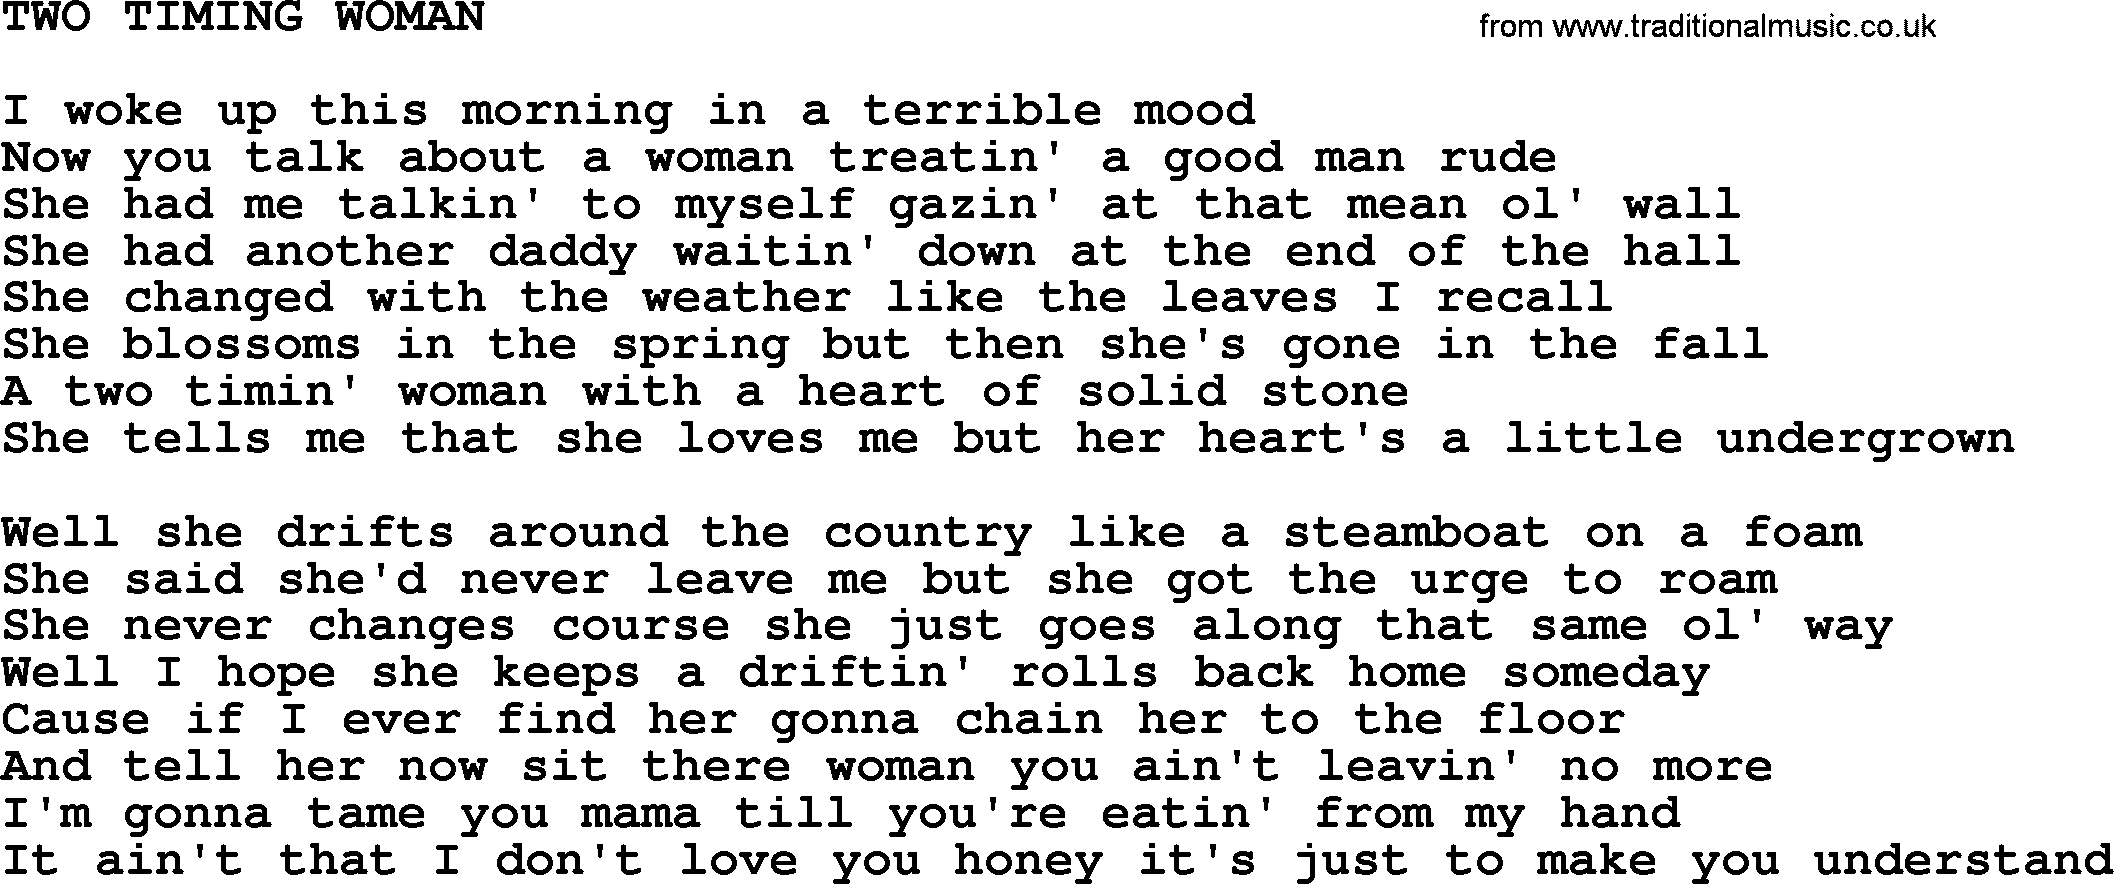 Johnny Cash song Two Timing Woman.txt lyrics